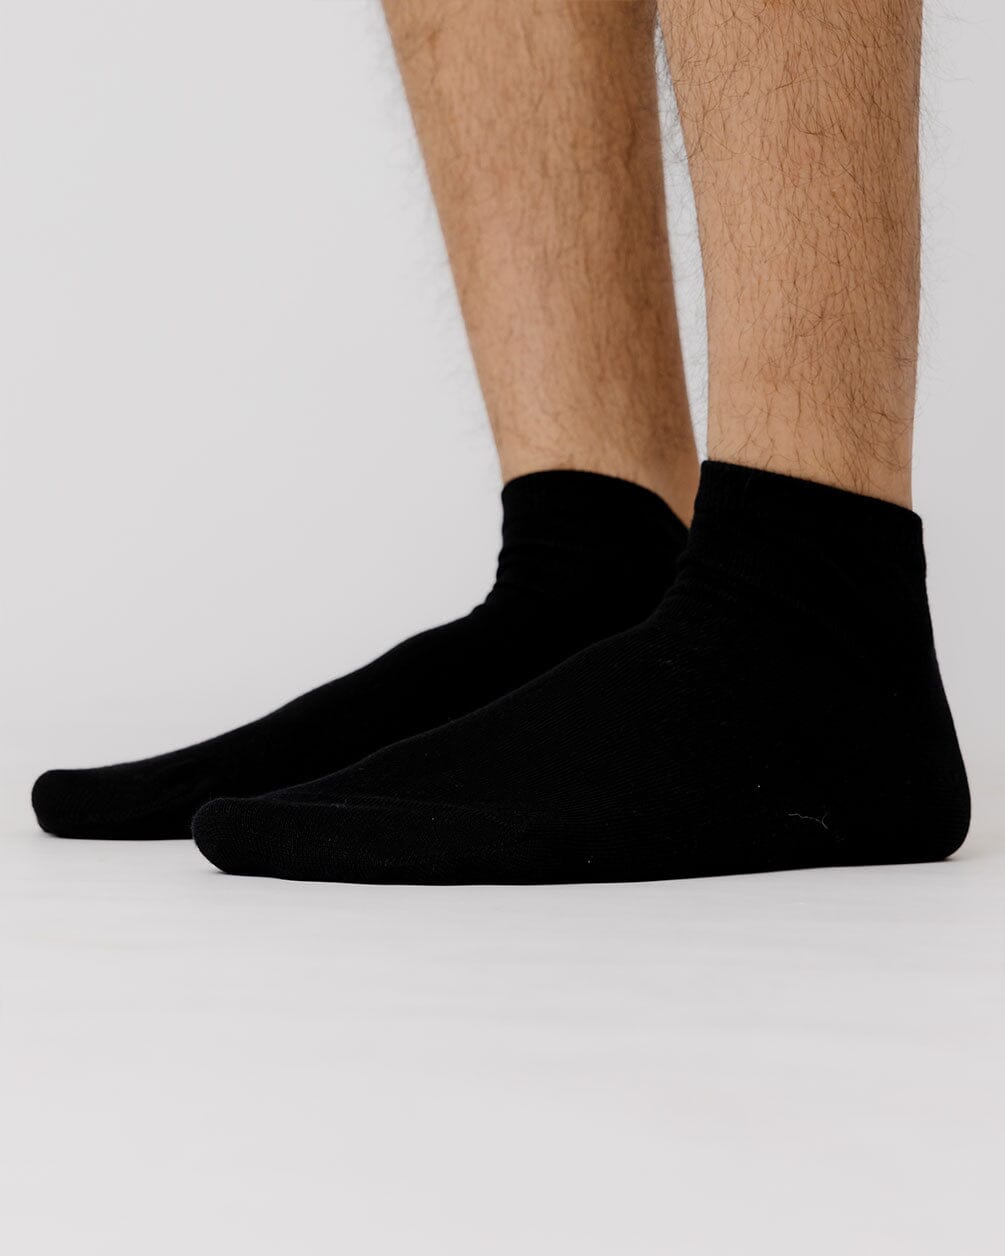 Solid Black Short Socks Short Socks In Your Shoe 